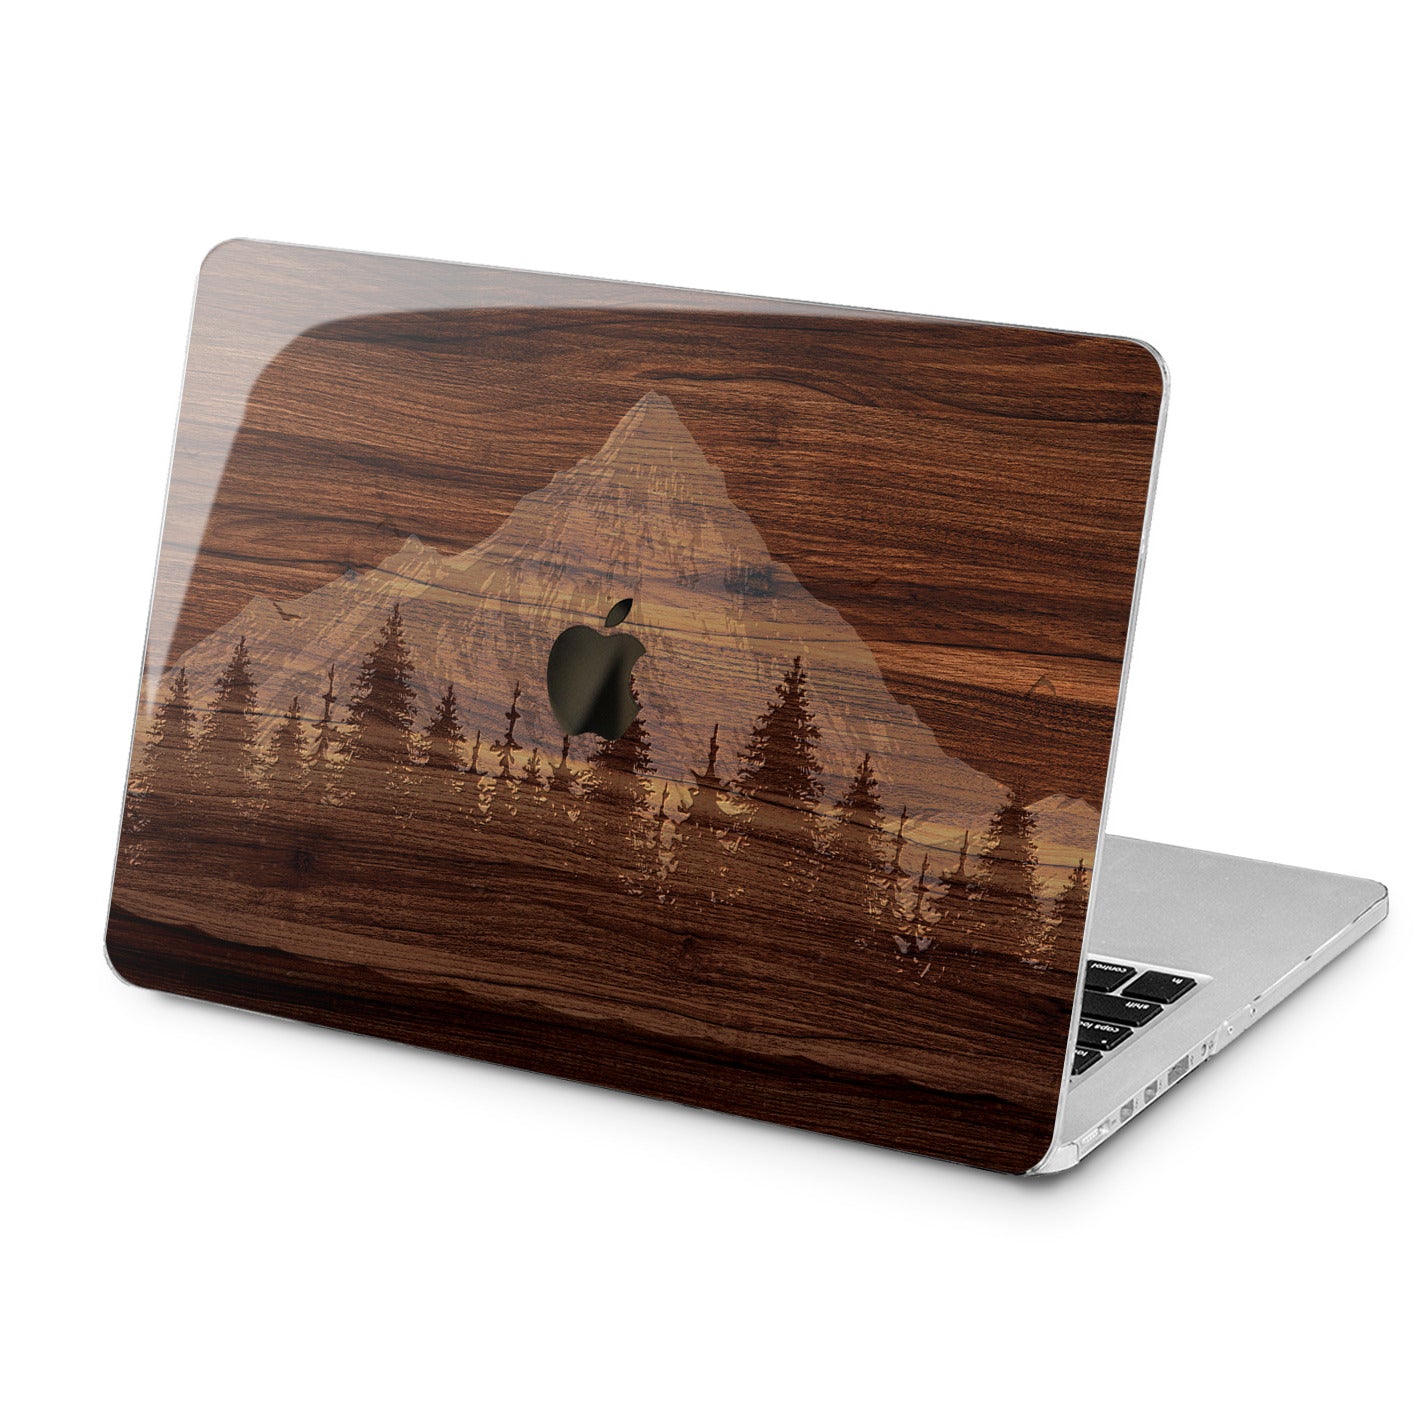 Lex Altern Lex Altern Wooden Mountain Case for your Laptop Apple Macbook.